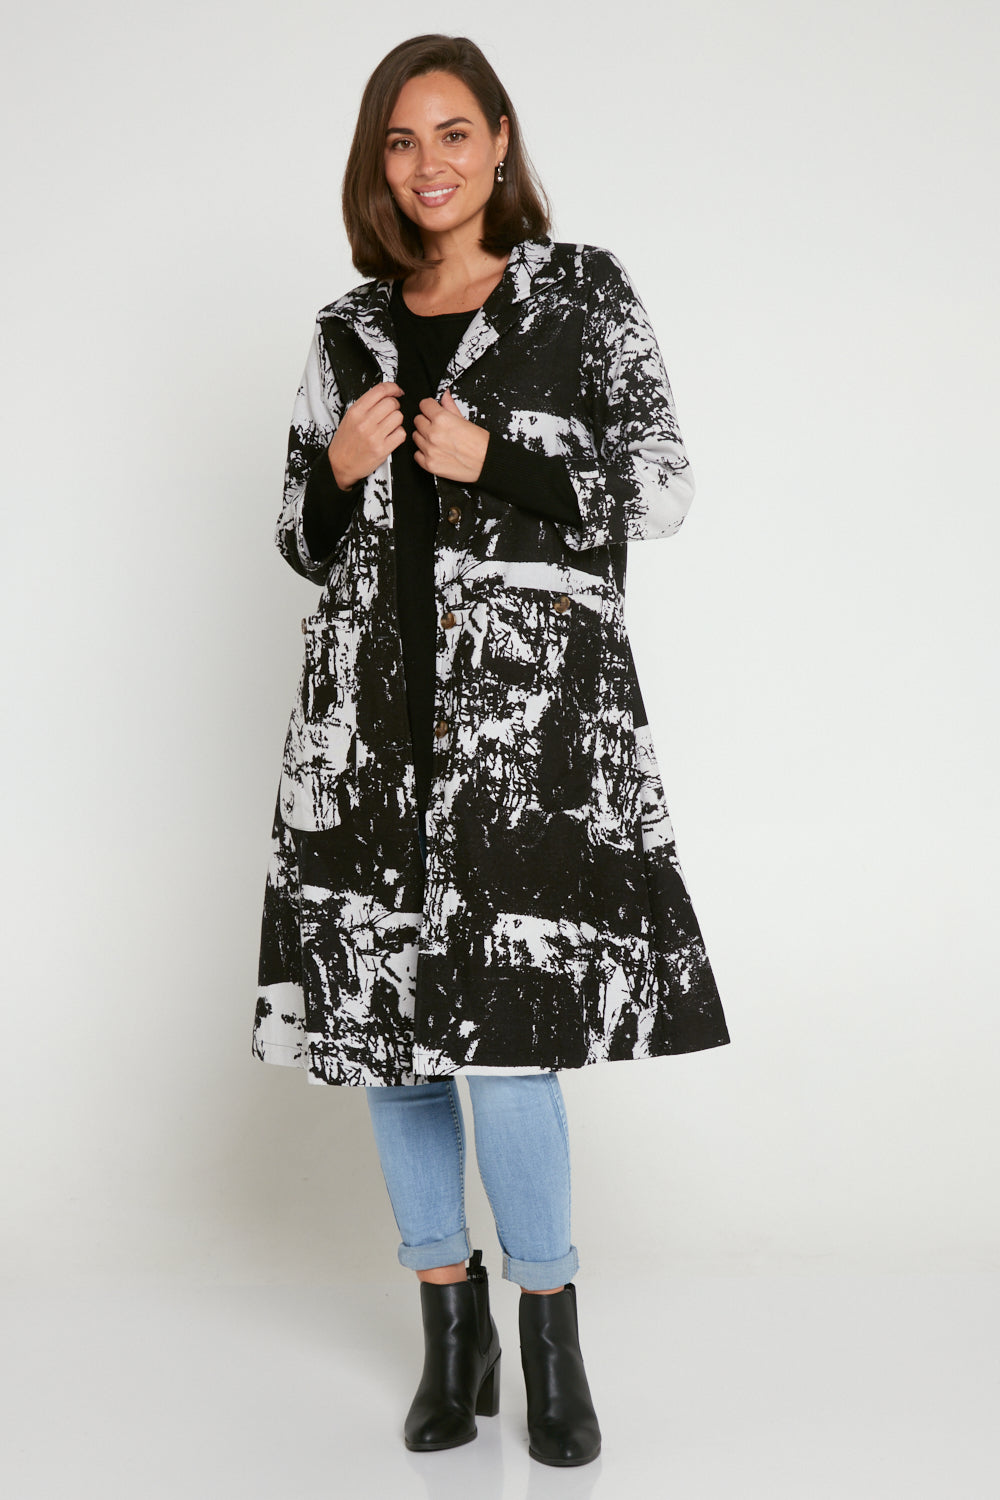 Carlton 3/4 Sleeve Fleece Lined Coat - Black/White Patch